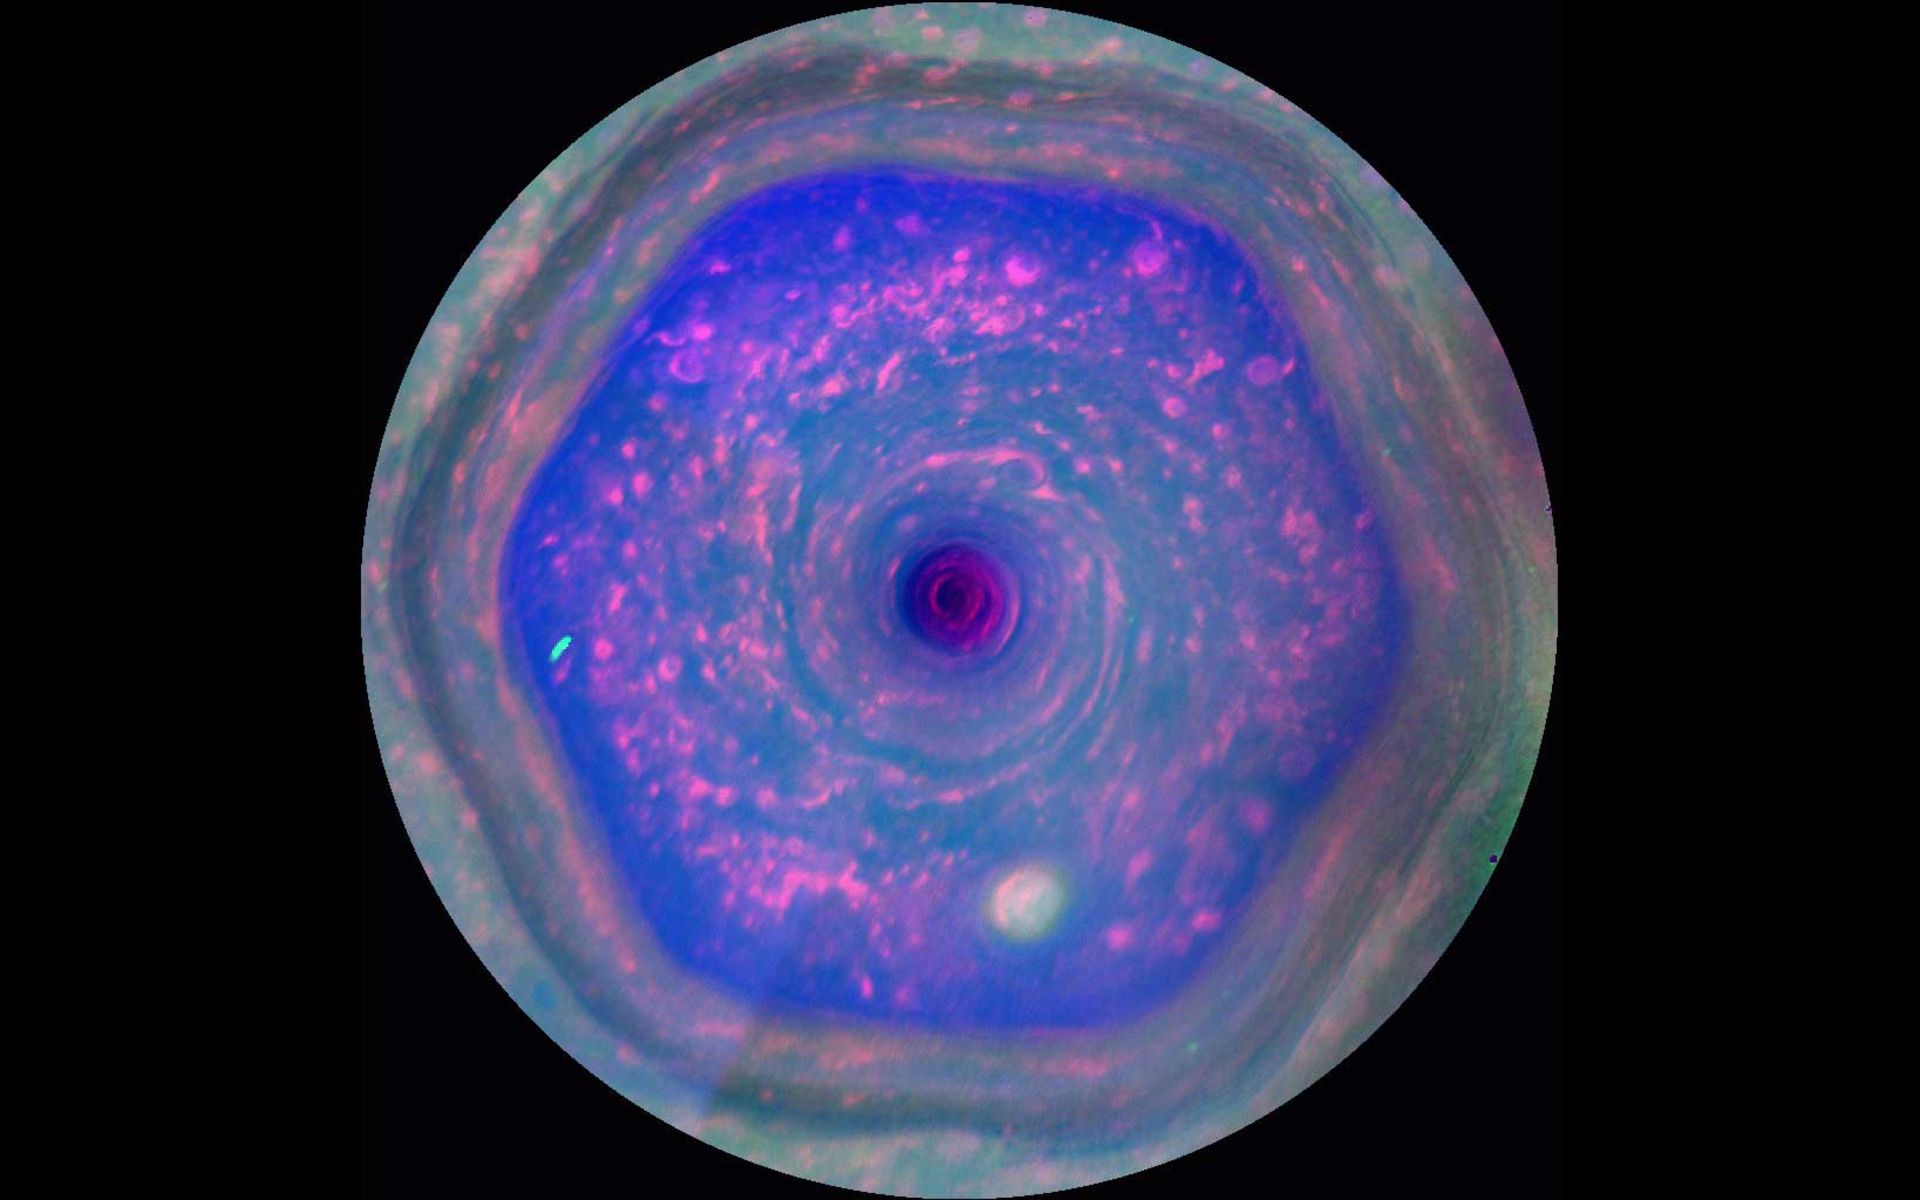 Saturn's strange hexagonal storm